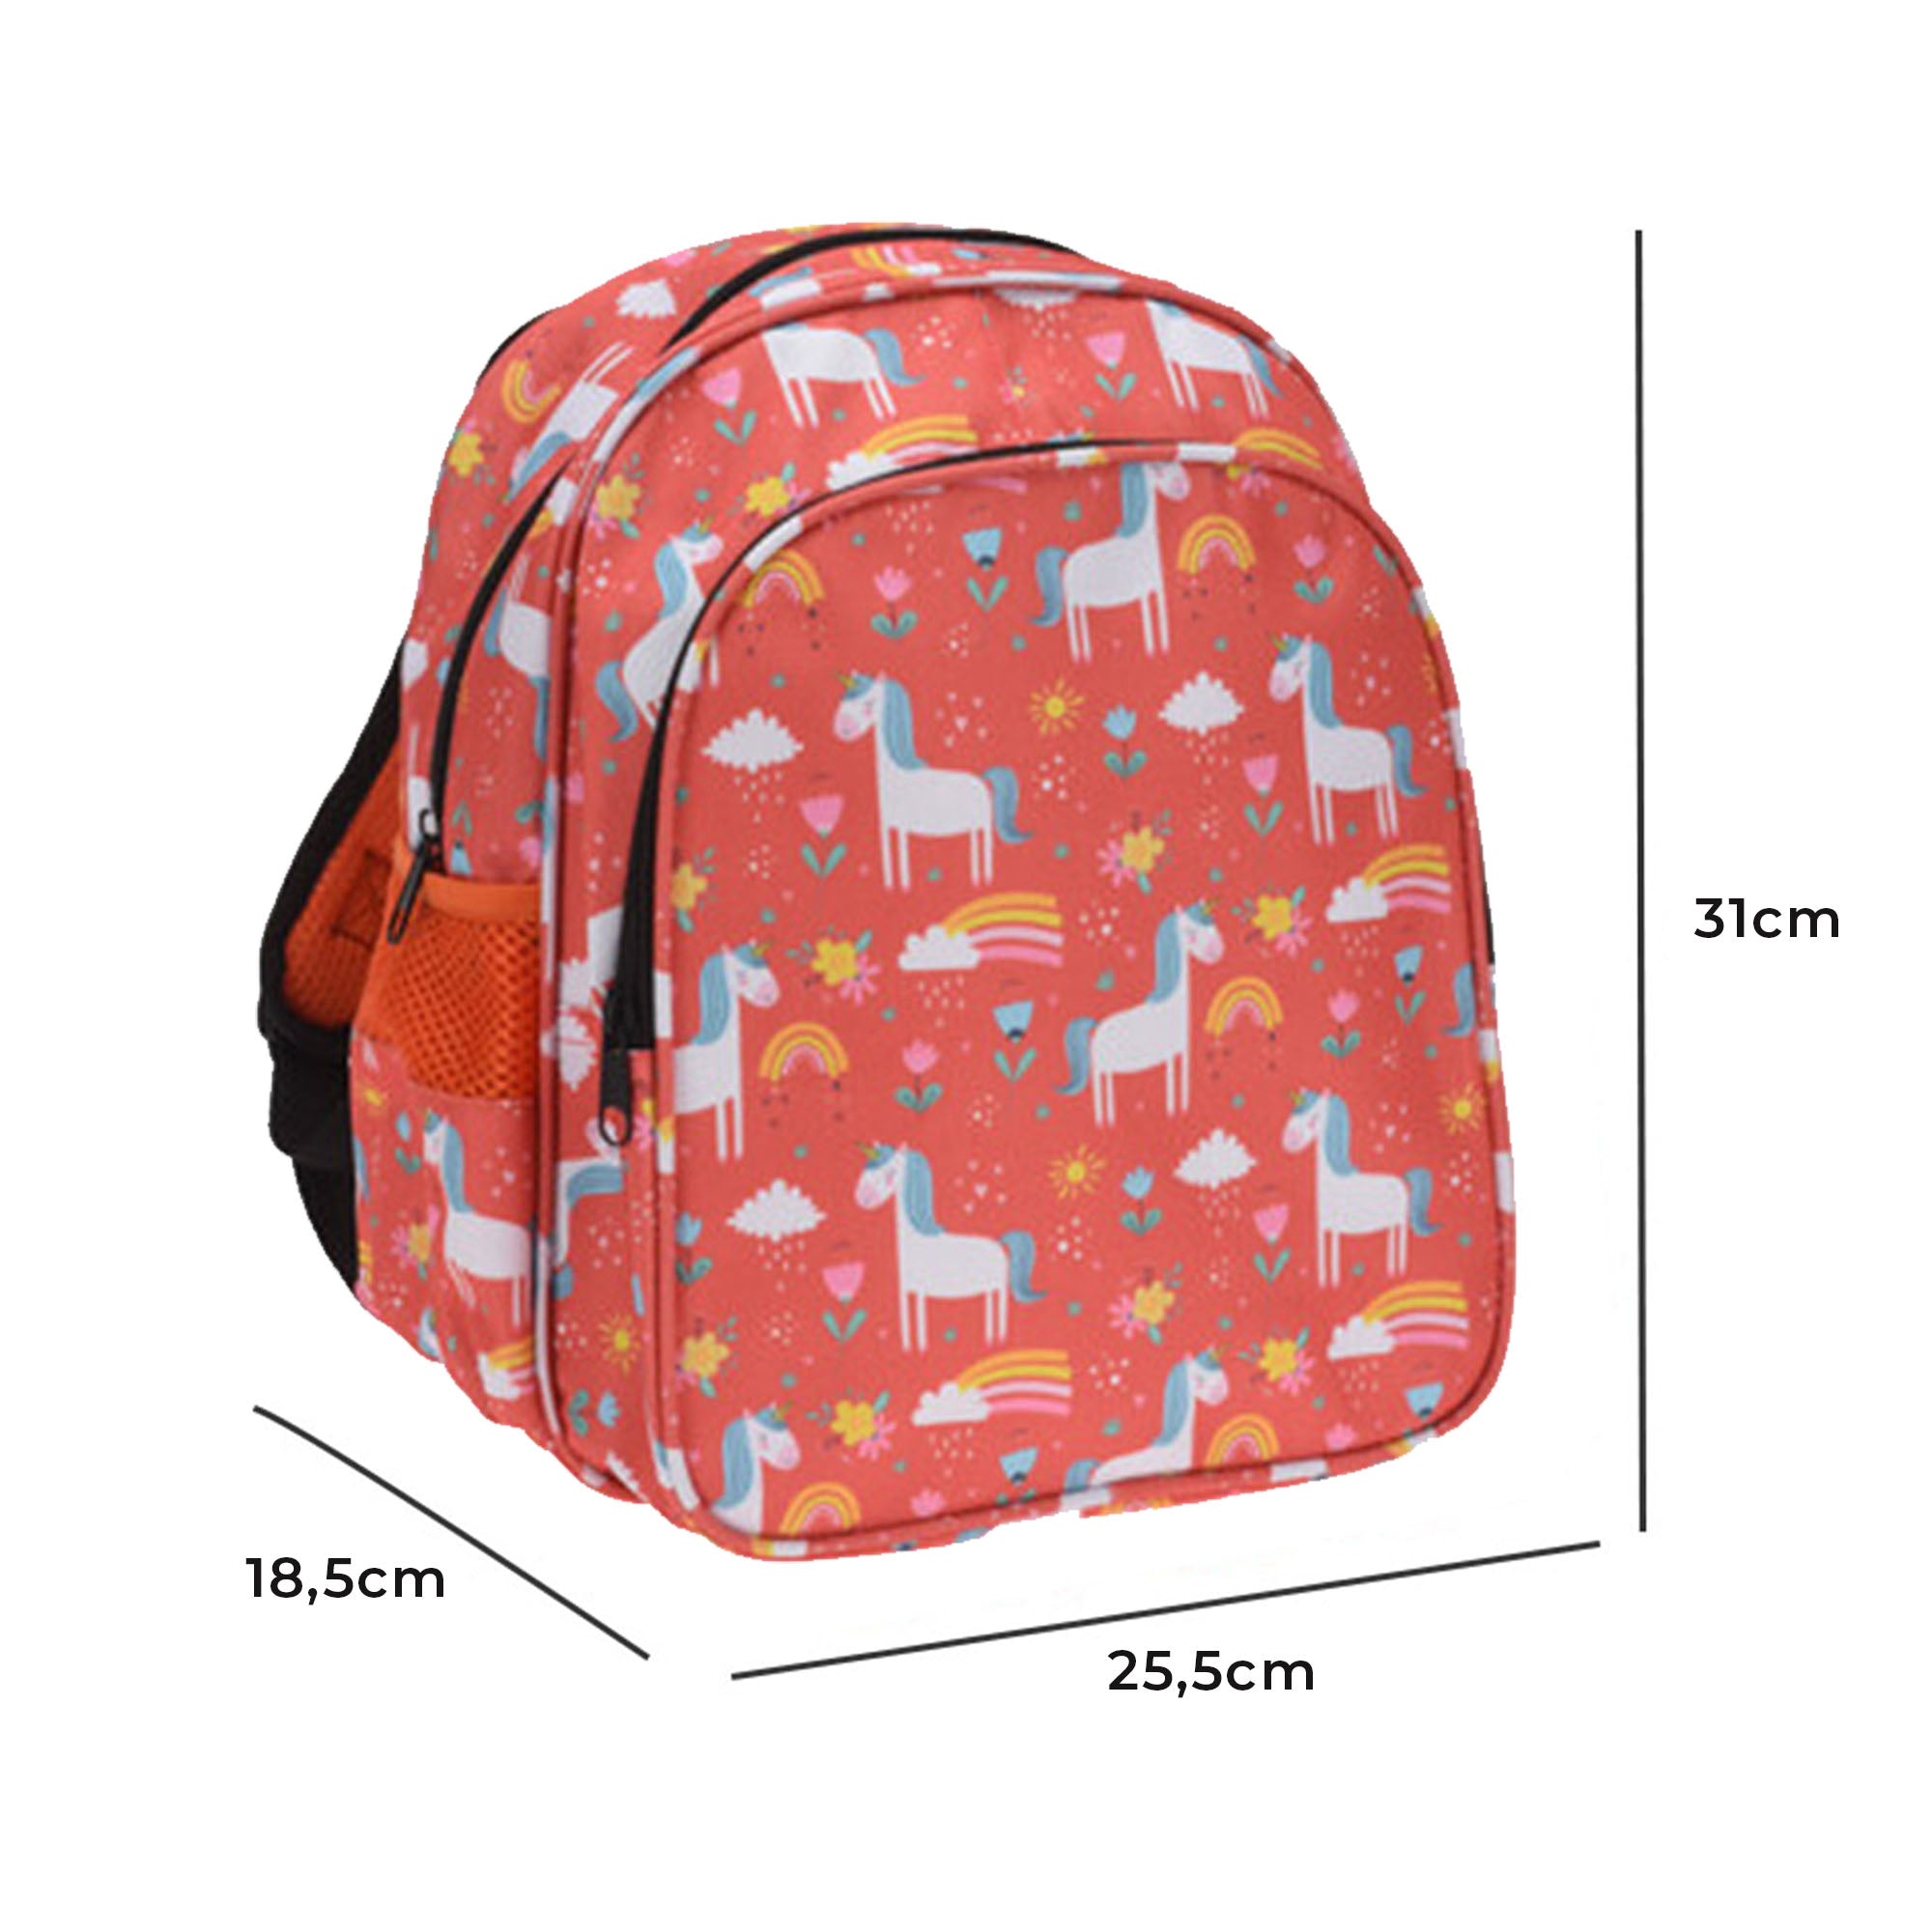 Kids Backpack design - Unicorn design